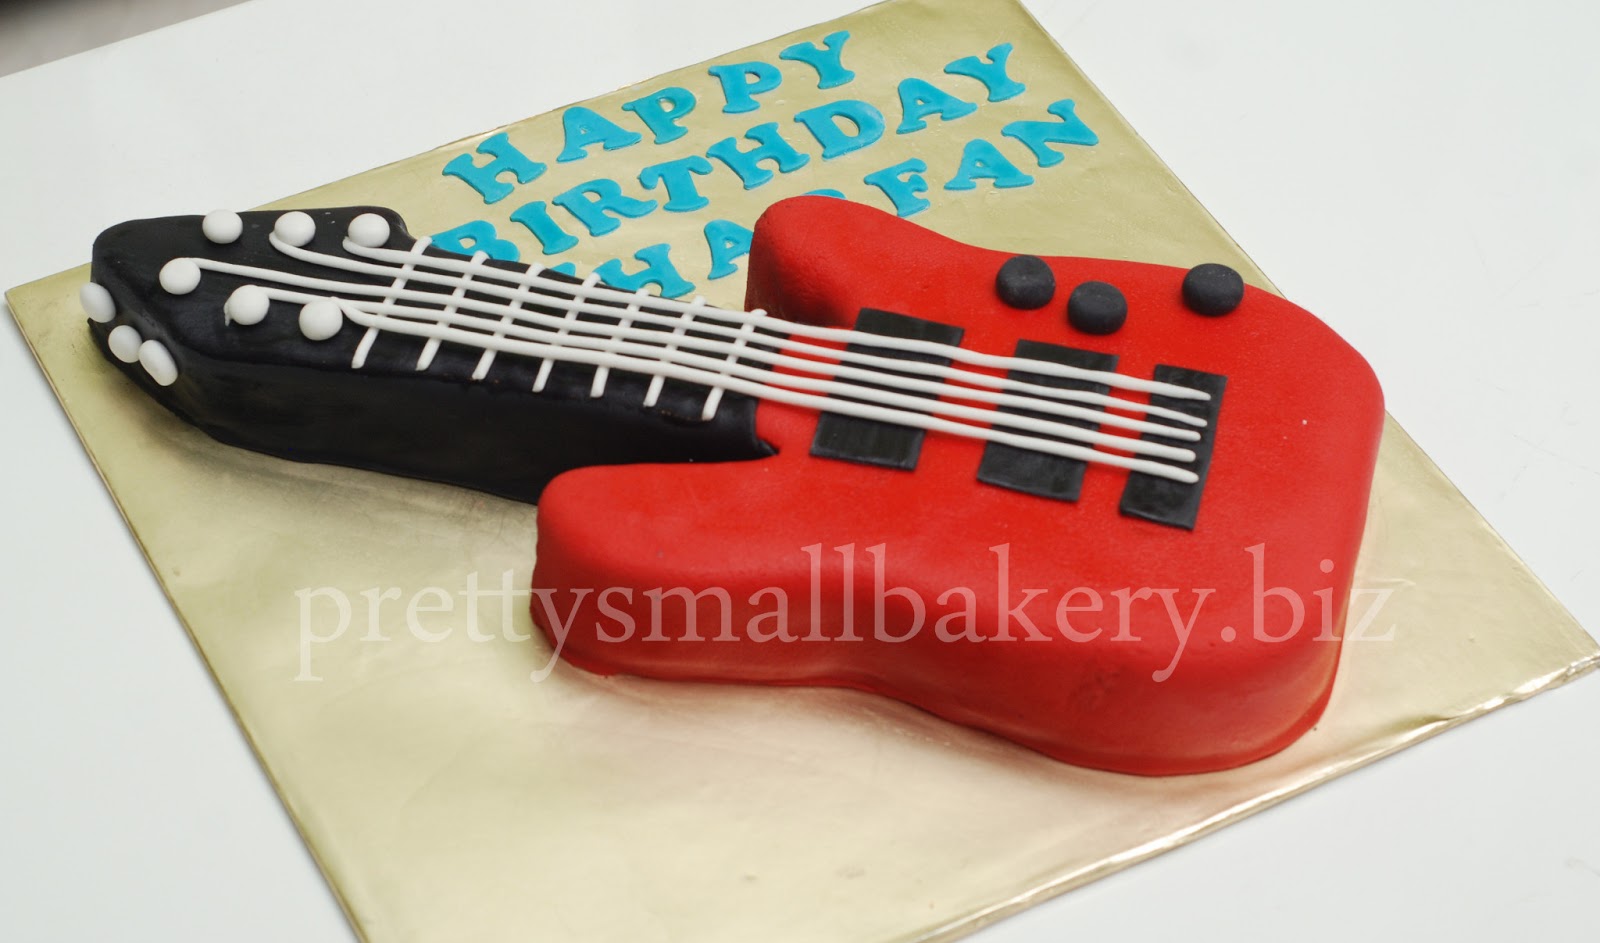 Kek birthday guitar untuk zhafran - Prettysmallbakery